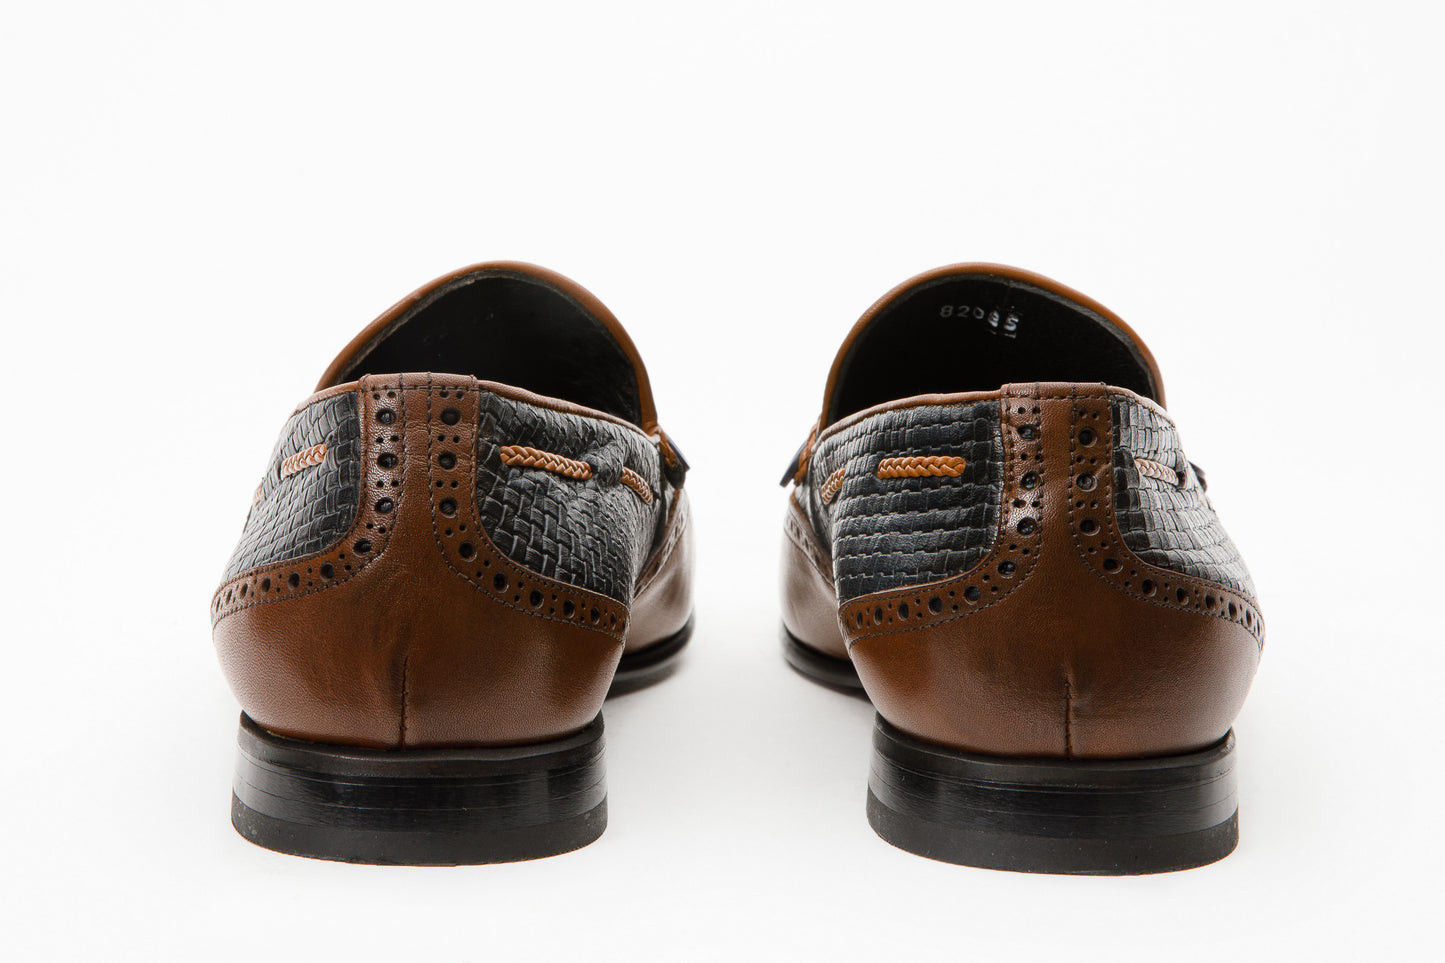 The Istanbul Tan & Navy Blue Leather Tassel Loafer Men Shoe